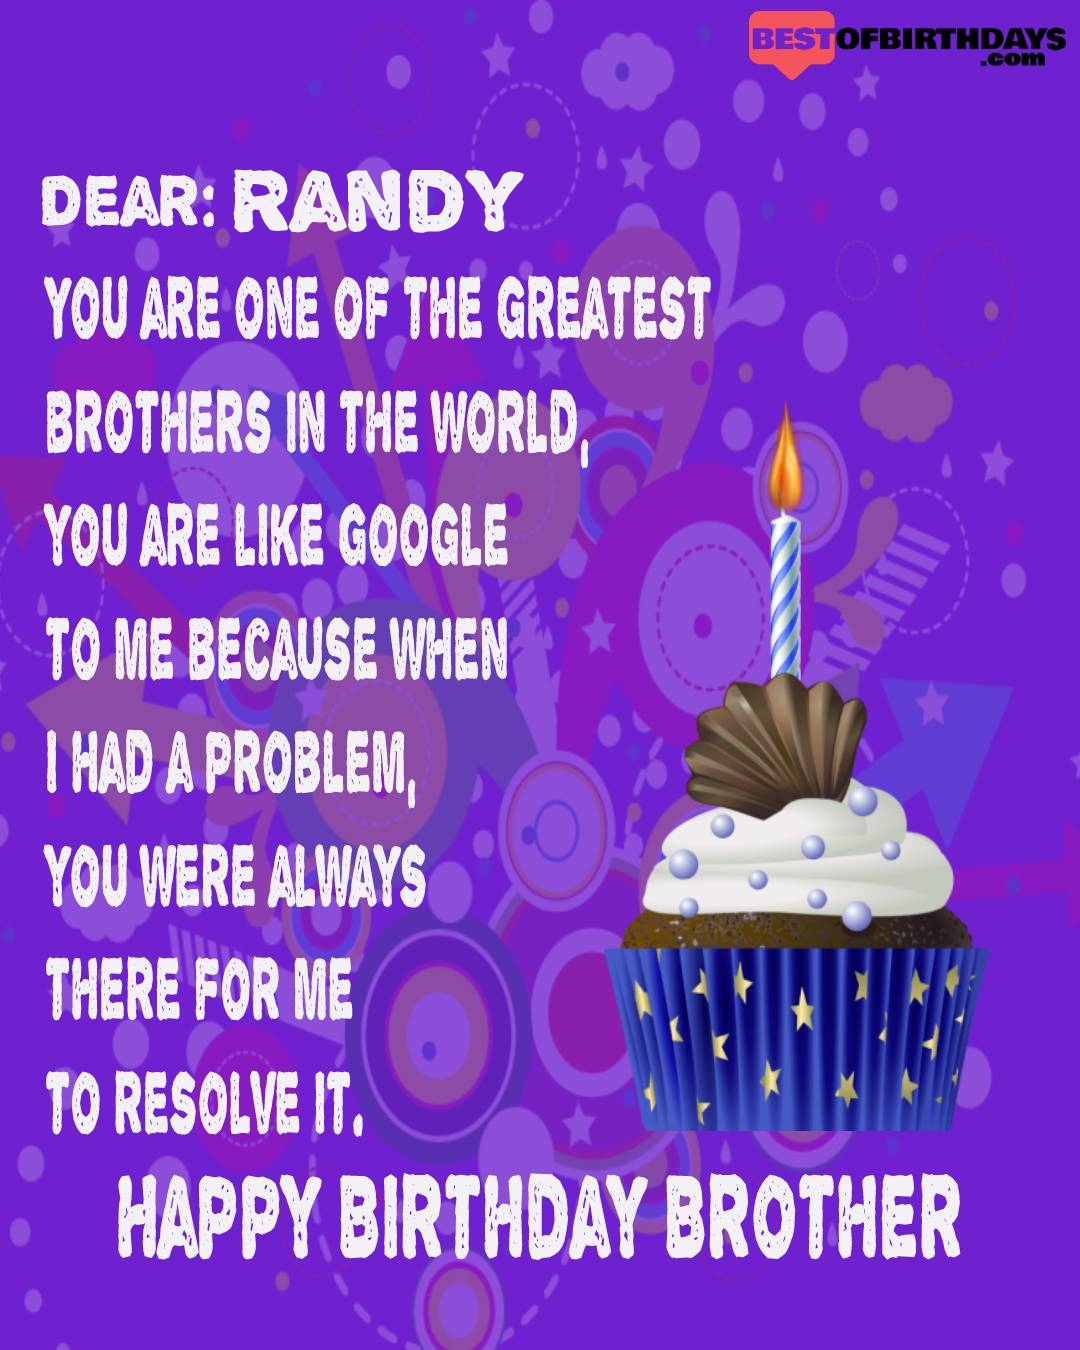 Happy birthday randy bhai brother bro